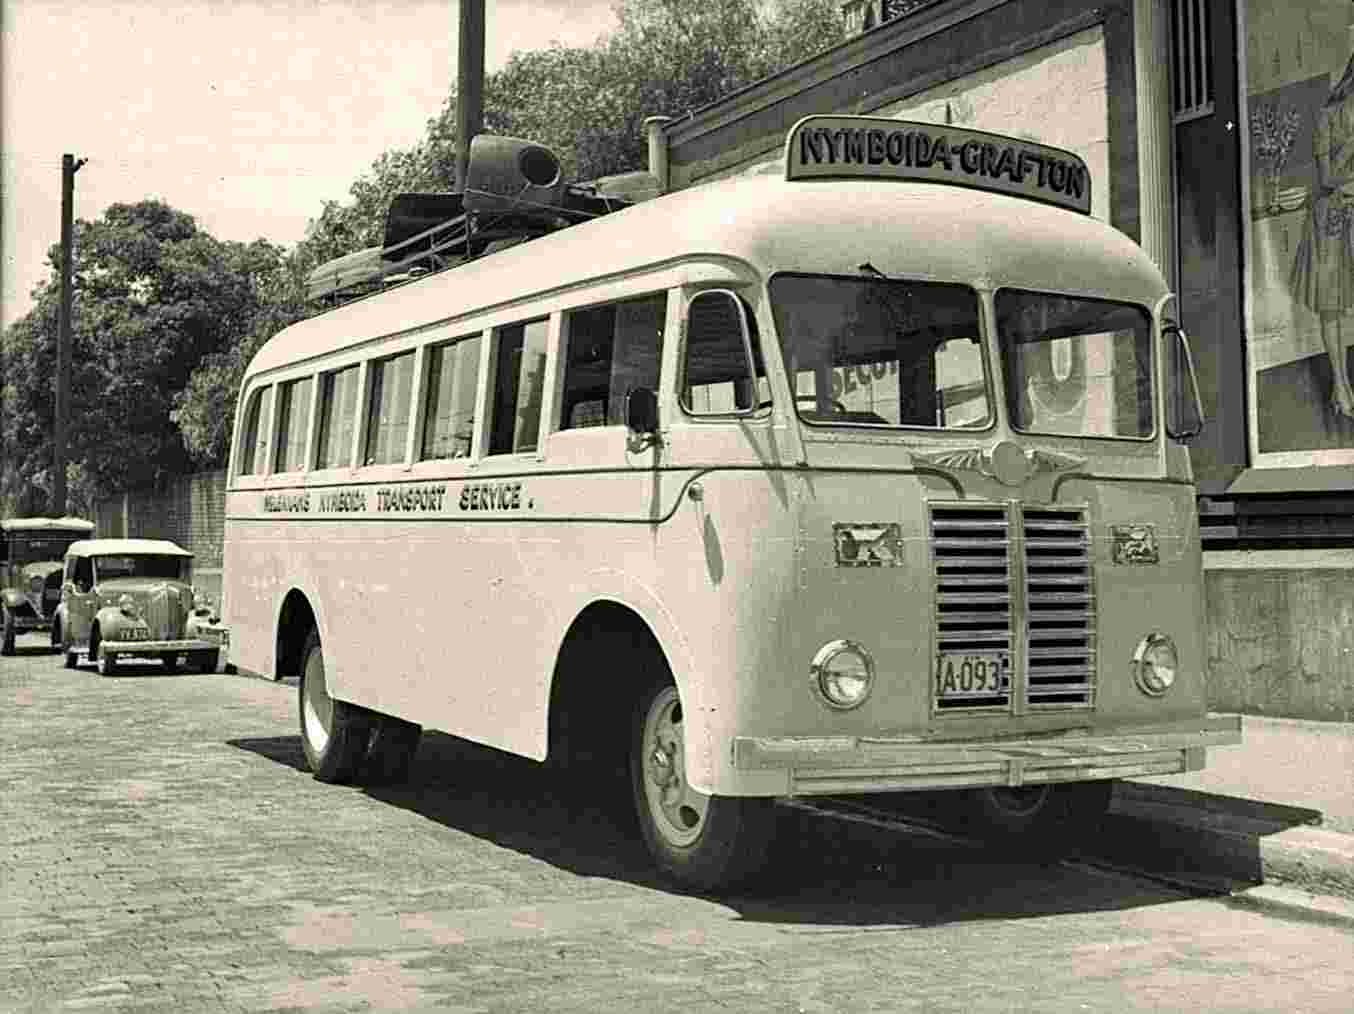 Grafton. Bus at line Nymboida - Grafton